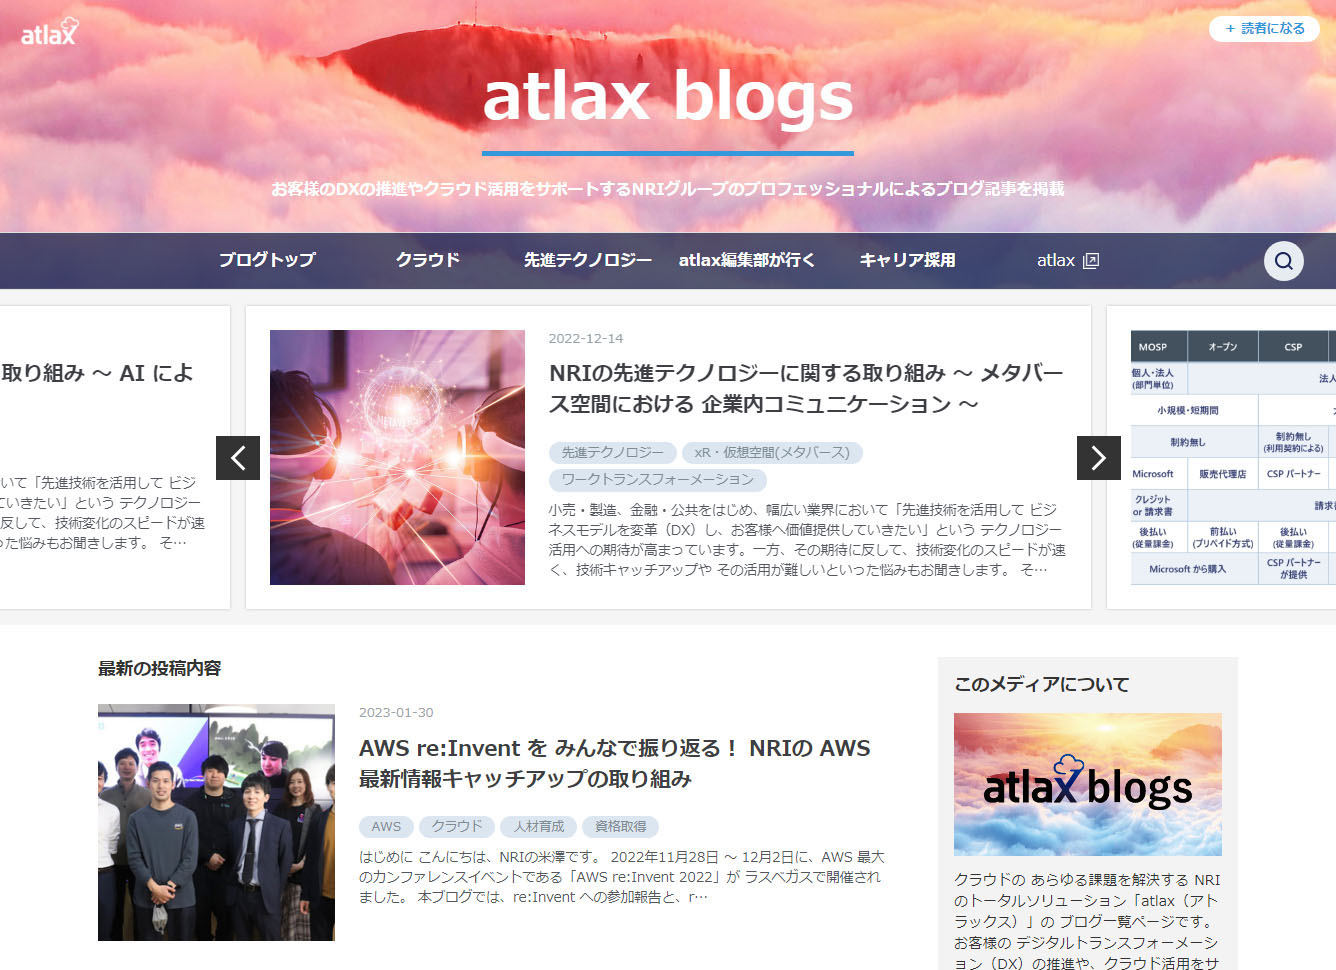 atlax blogs サイト